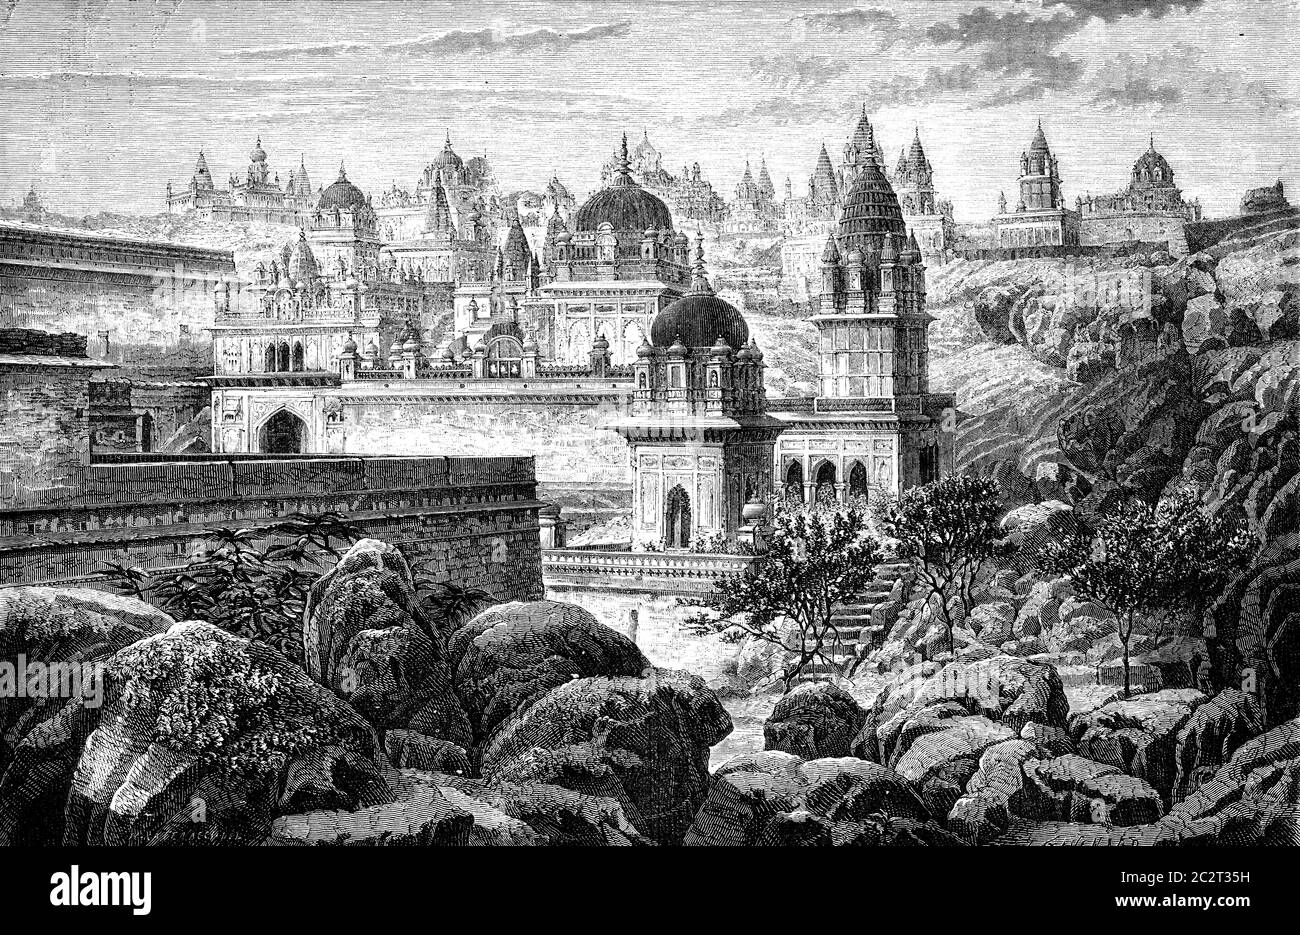 Sounghur sacred hill, view from the village, vintage engraved illustration. Le Tour du Monde, Travel Journal, (1872). Stock Photo